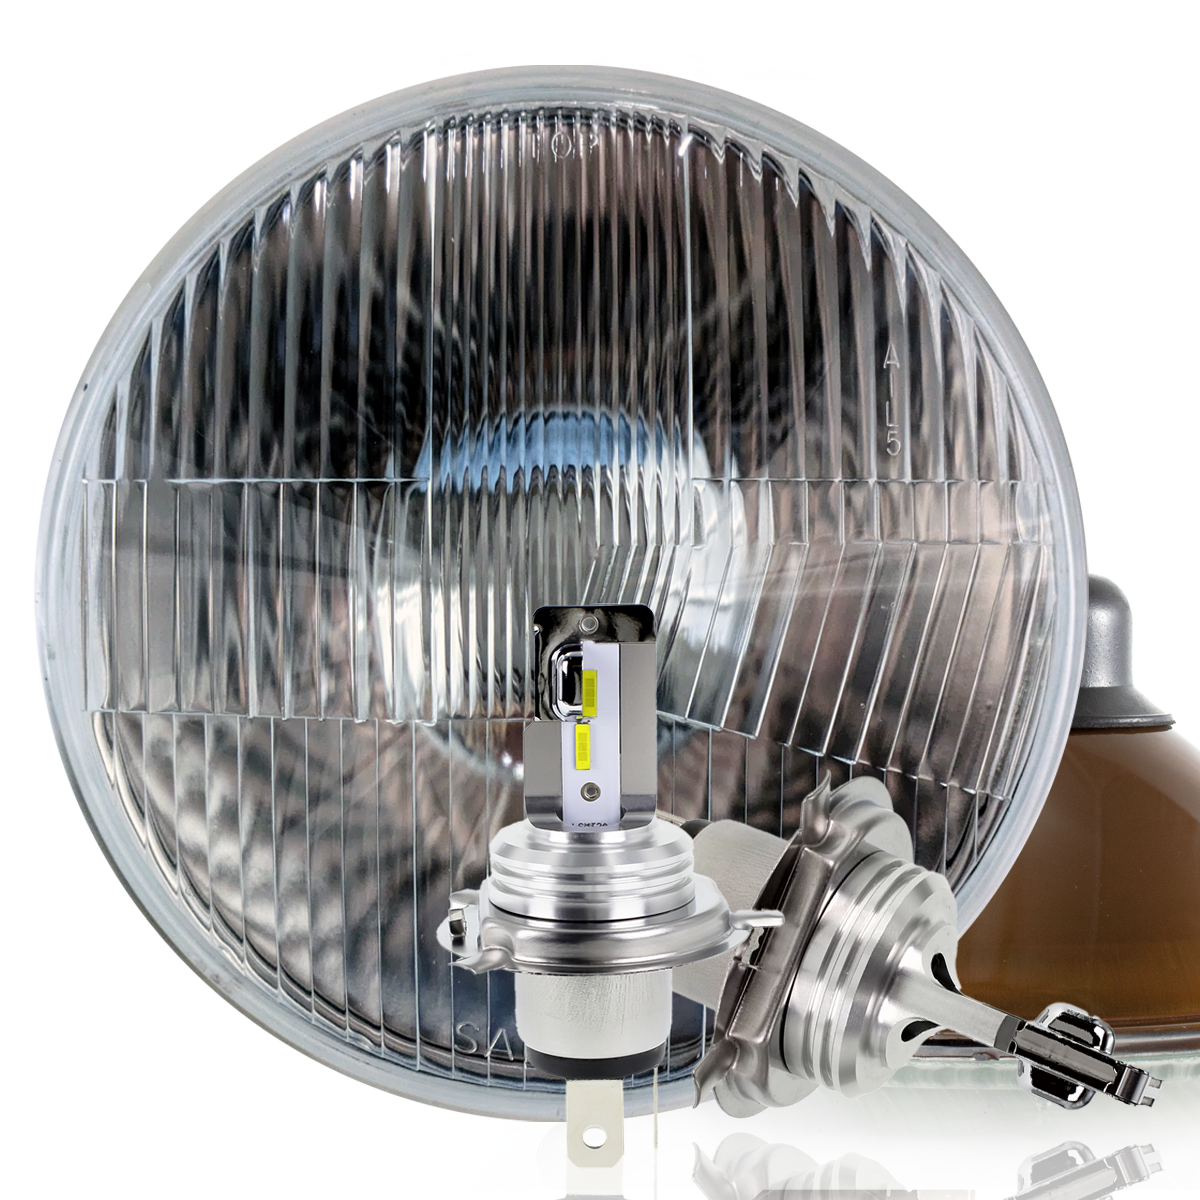 LED Headlight H4 Base 6V 30 LED Bulb High and Low Beam